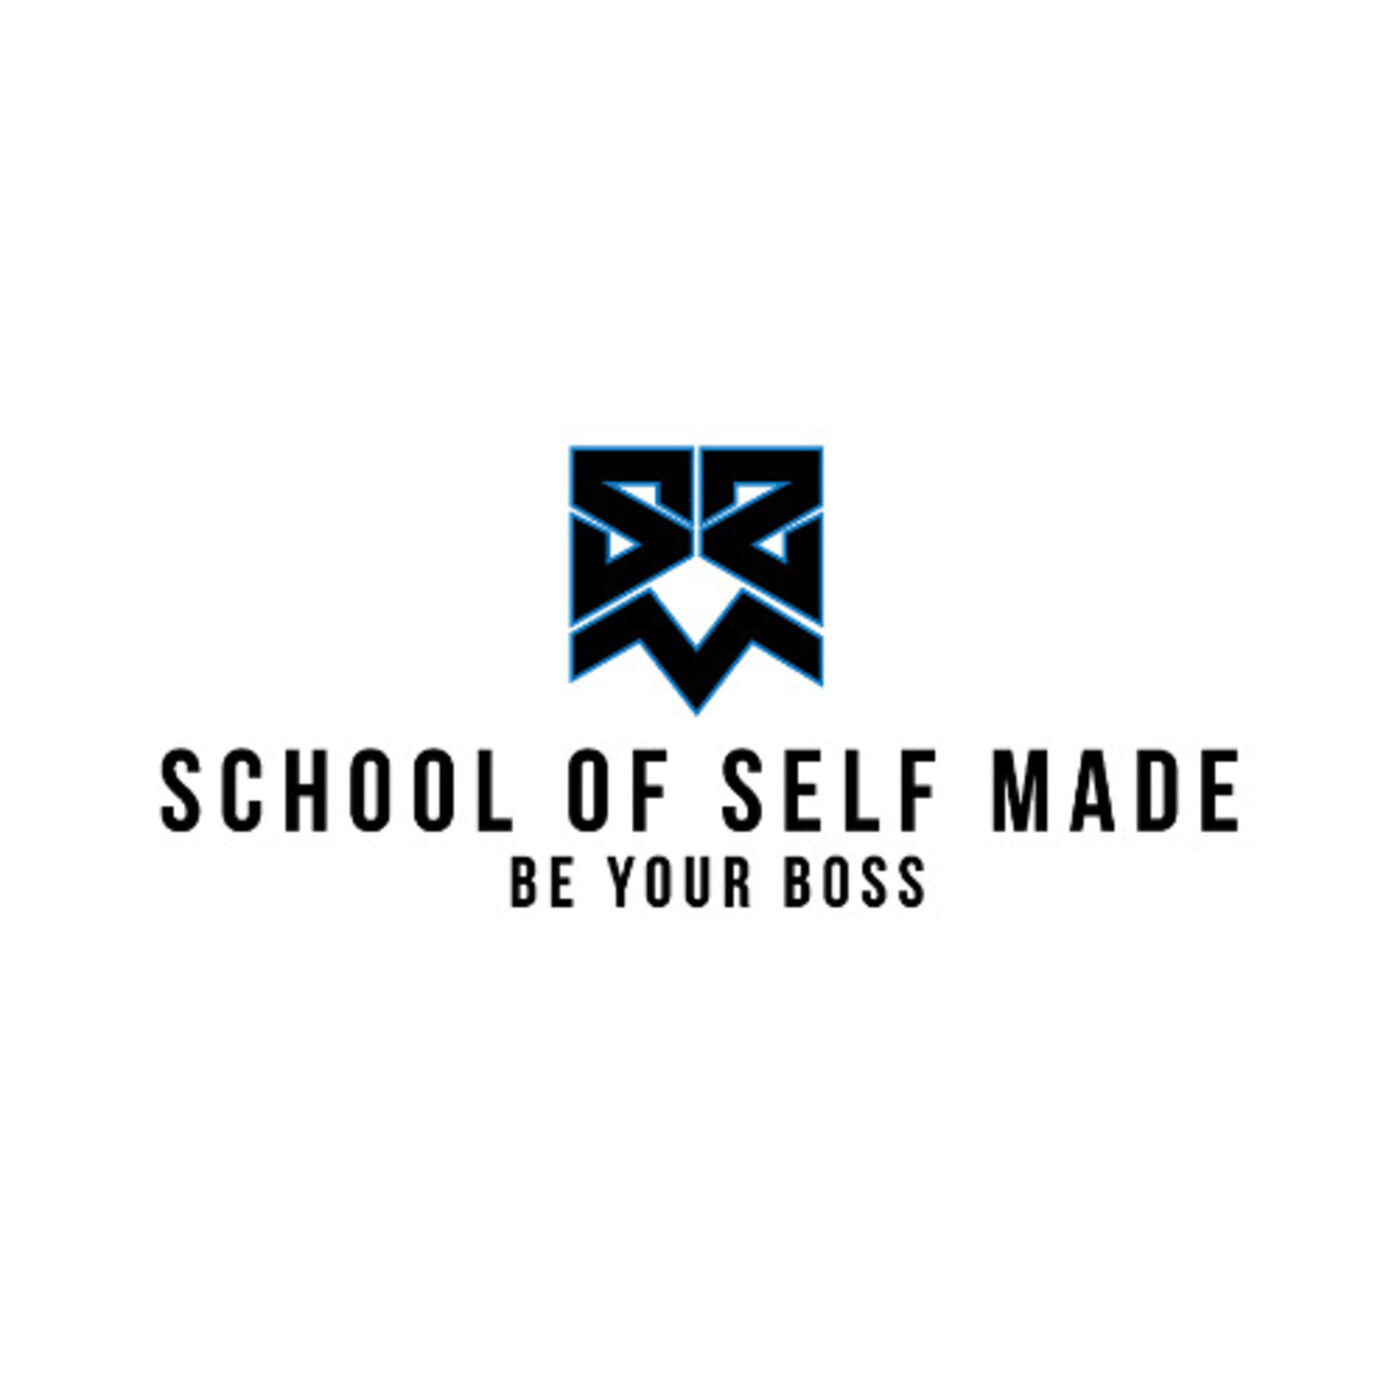 School of Self Made Trailer Image